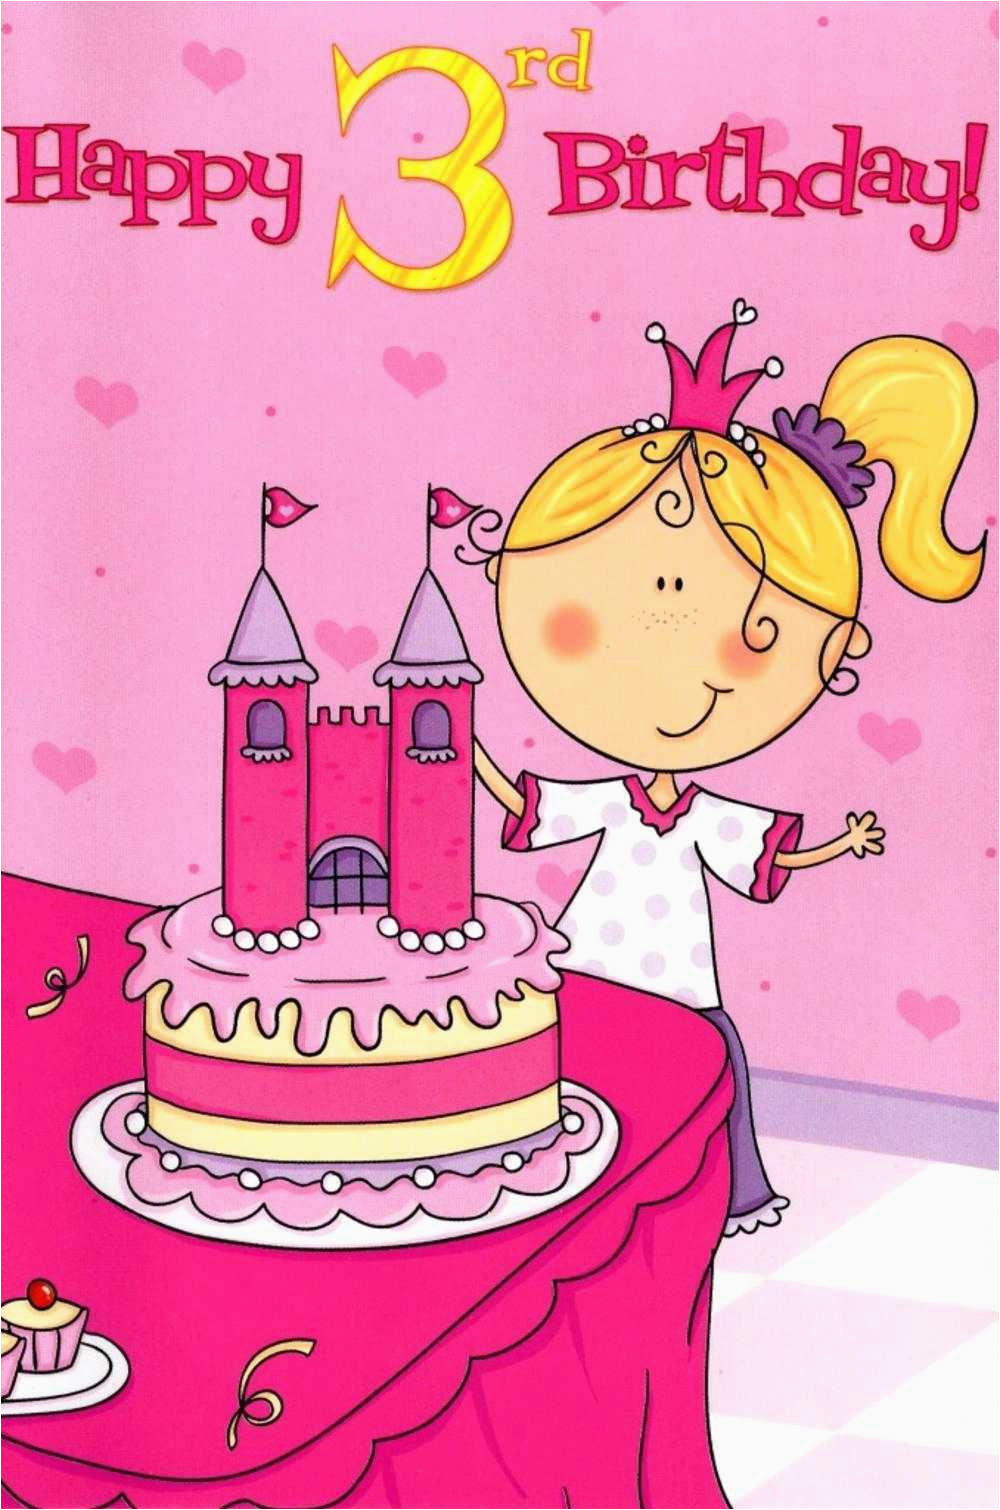 Birthday Cards for 3 Years Old Girl | BirthdayBuzz